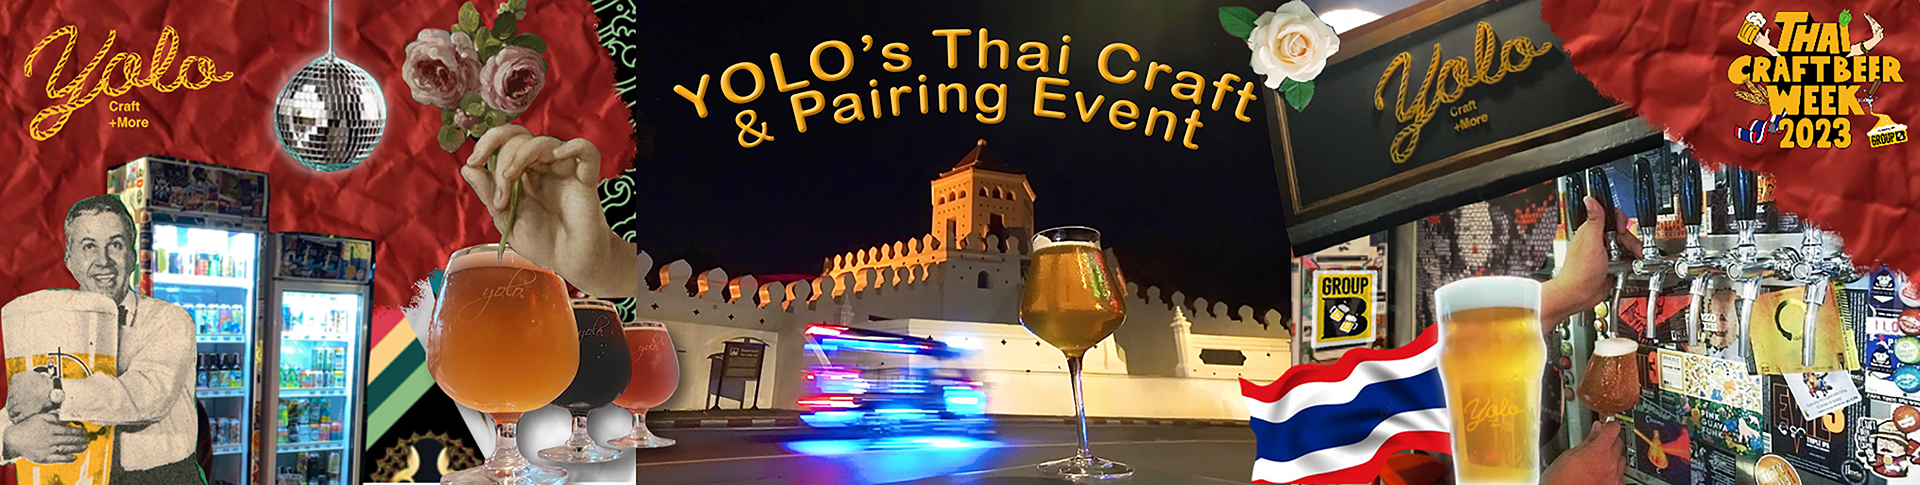 YOLO’s Thai Craft & Pairing Event